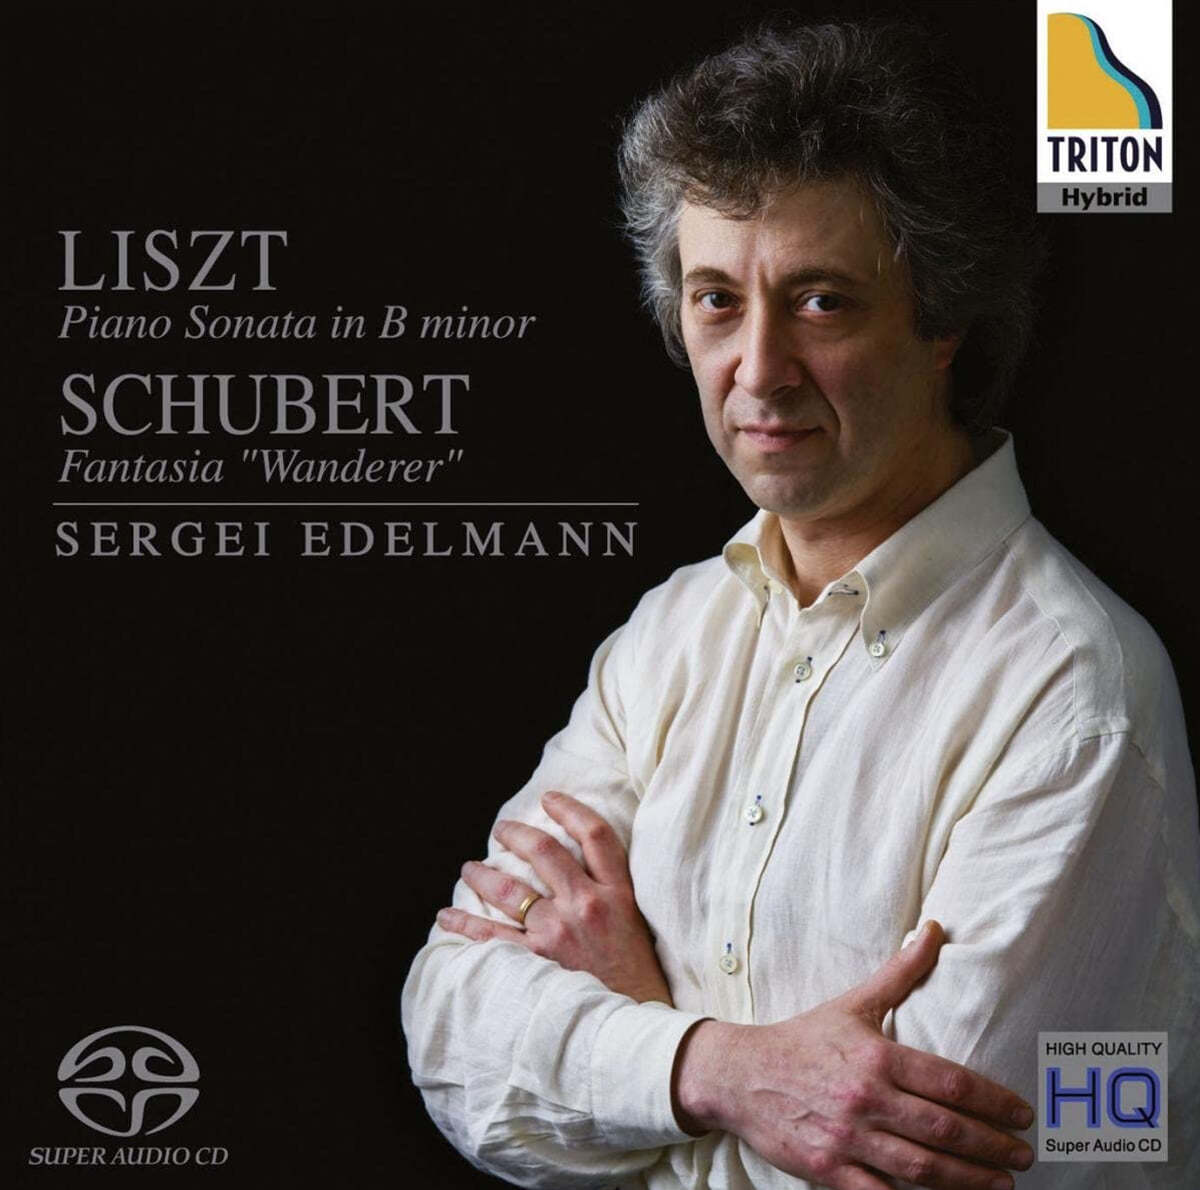 Sergei Edelmann 리스트: 피아노 소나타 / 슈베르트: 방랑자 환상곡 (Liszt: Piano Sonata in B minor S.178 / Schubert: Fantasia "Wanderer" D.760 Op.15) 